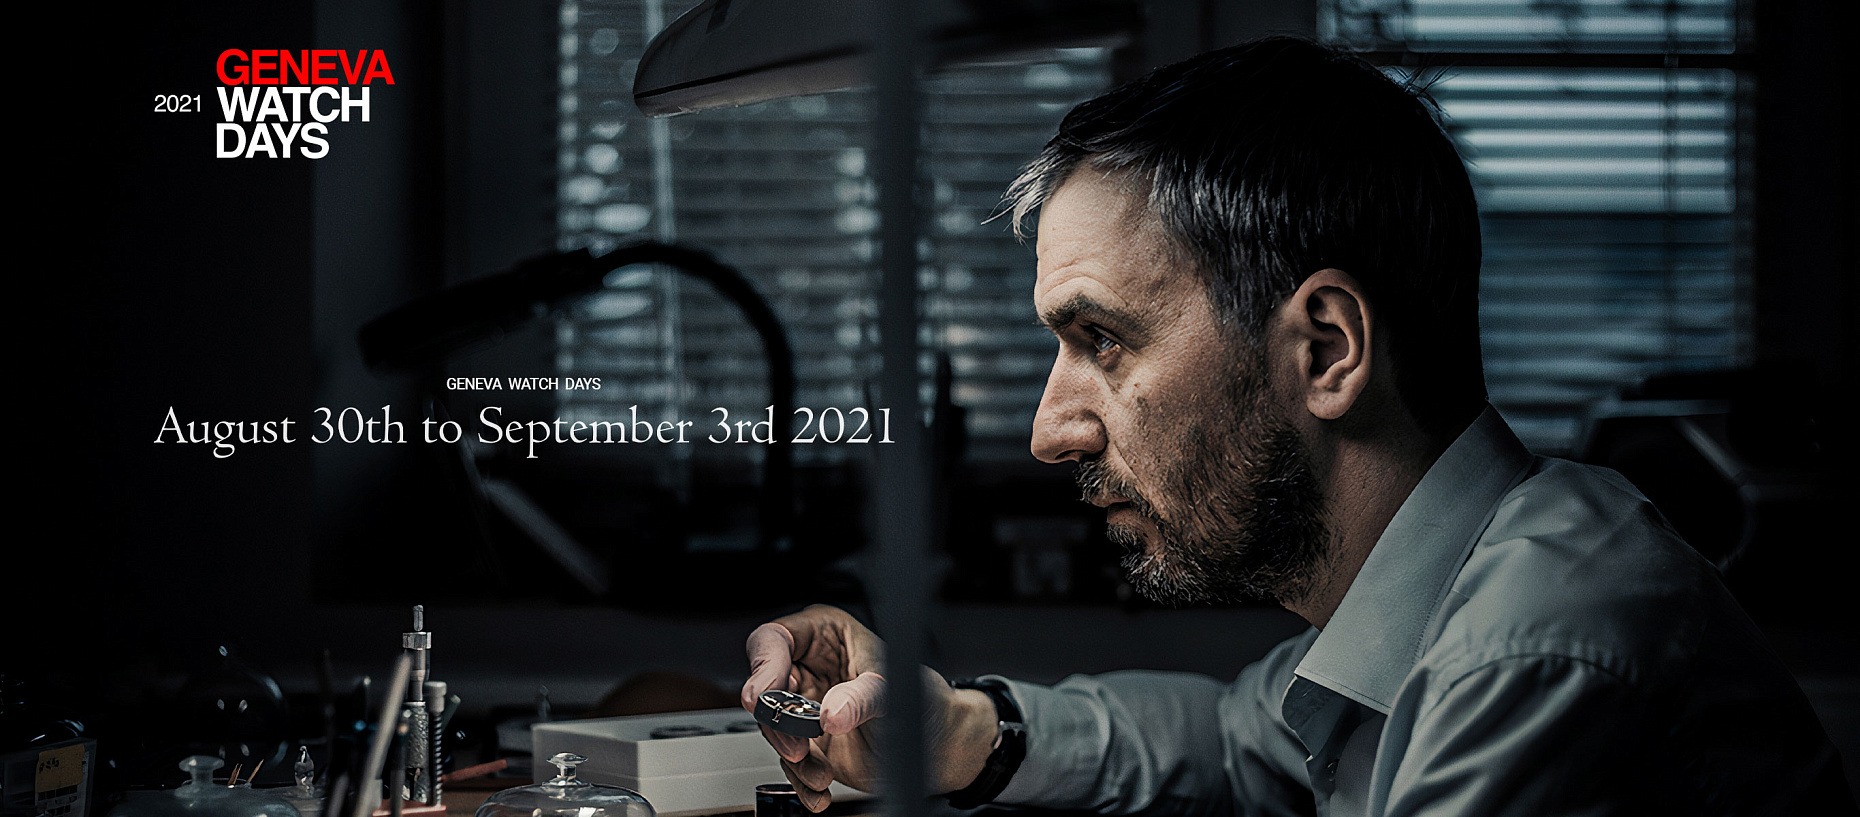 Independent Russian watchmaker Konstantin Chaykin to take part in the Geneva Watch Days 2021 exhibition